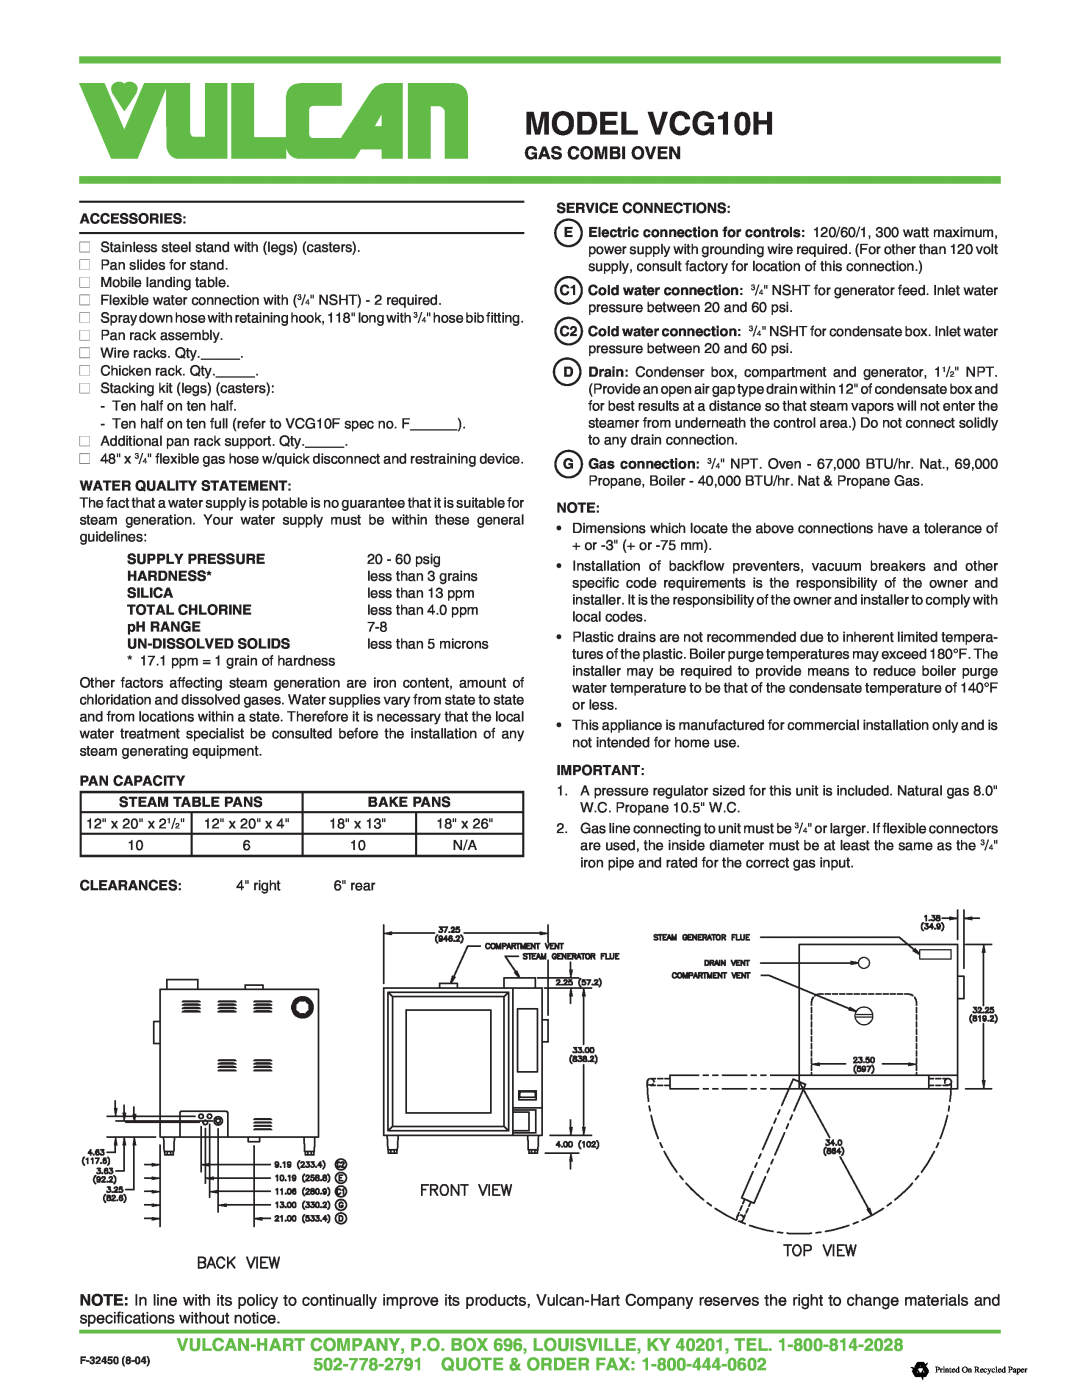 Vulcan-Hart specifications MODEL VCG10H, Gas Combi Oven, Accessories 